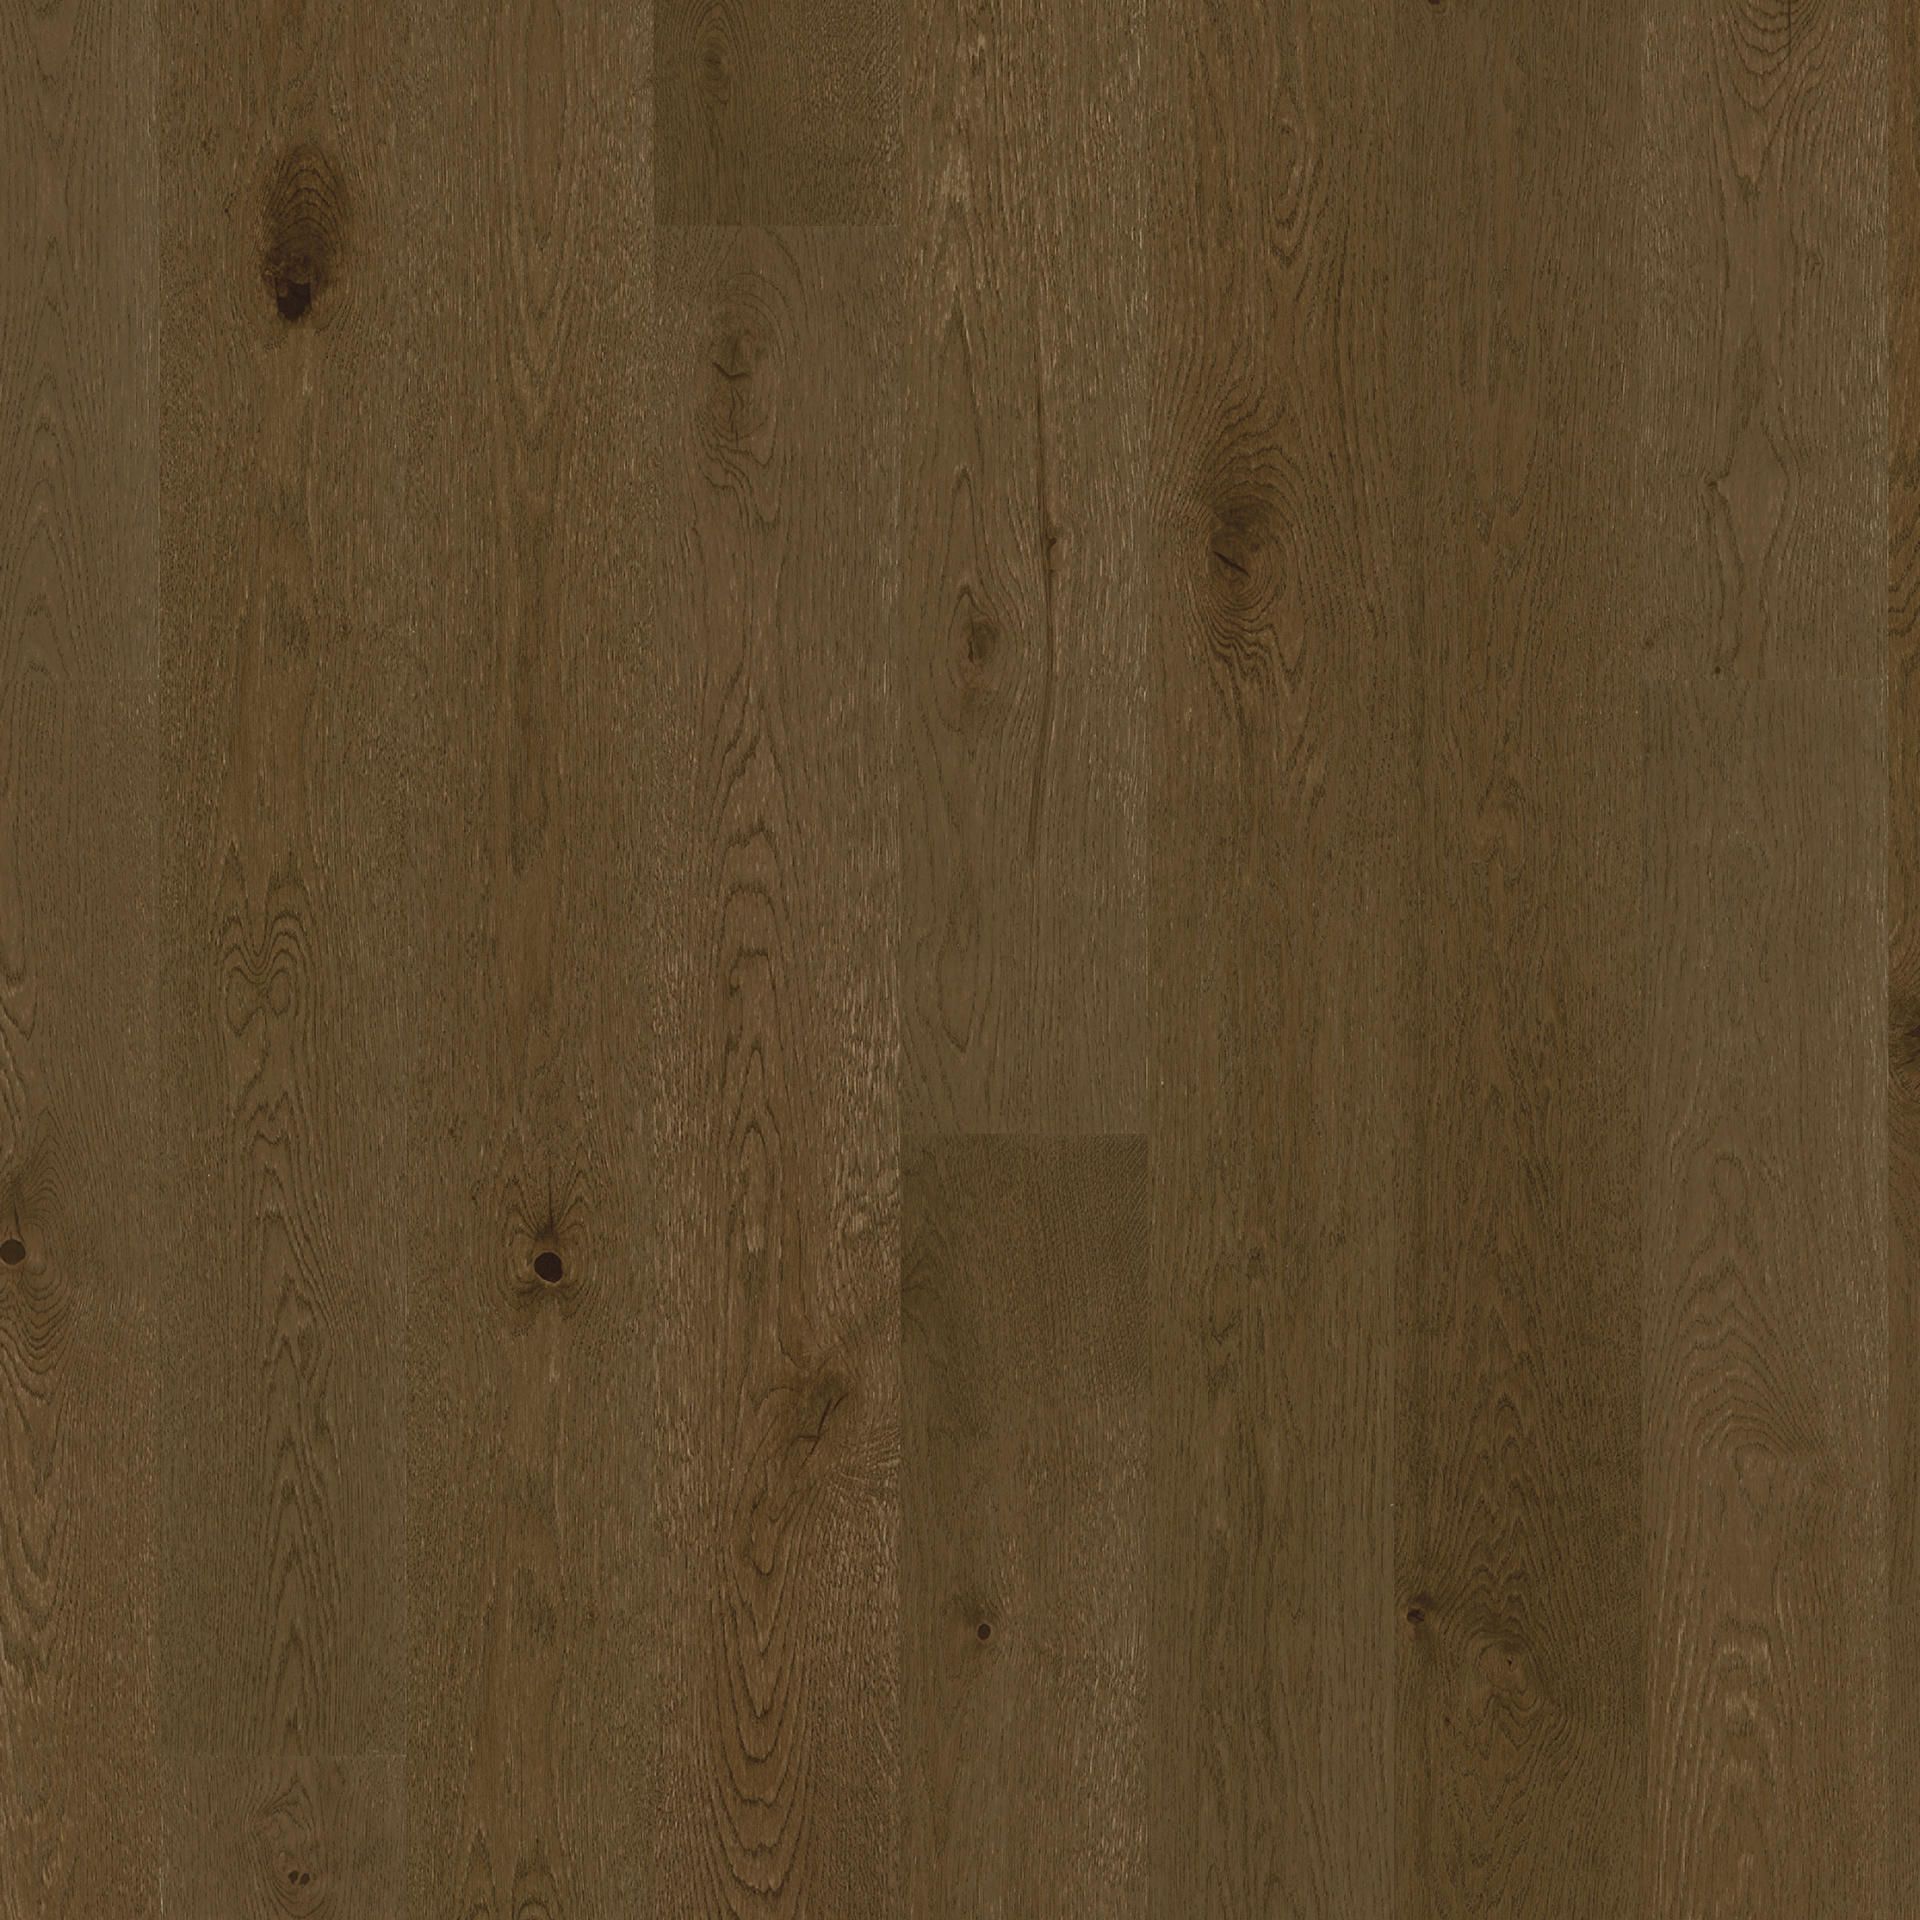 Holzboden Eiche Italian brown 1 Stab MADRID-TB15 Planke 162 x 2000 mm